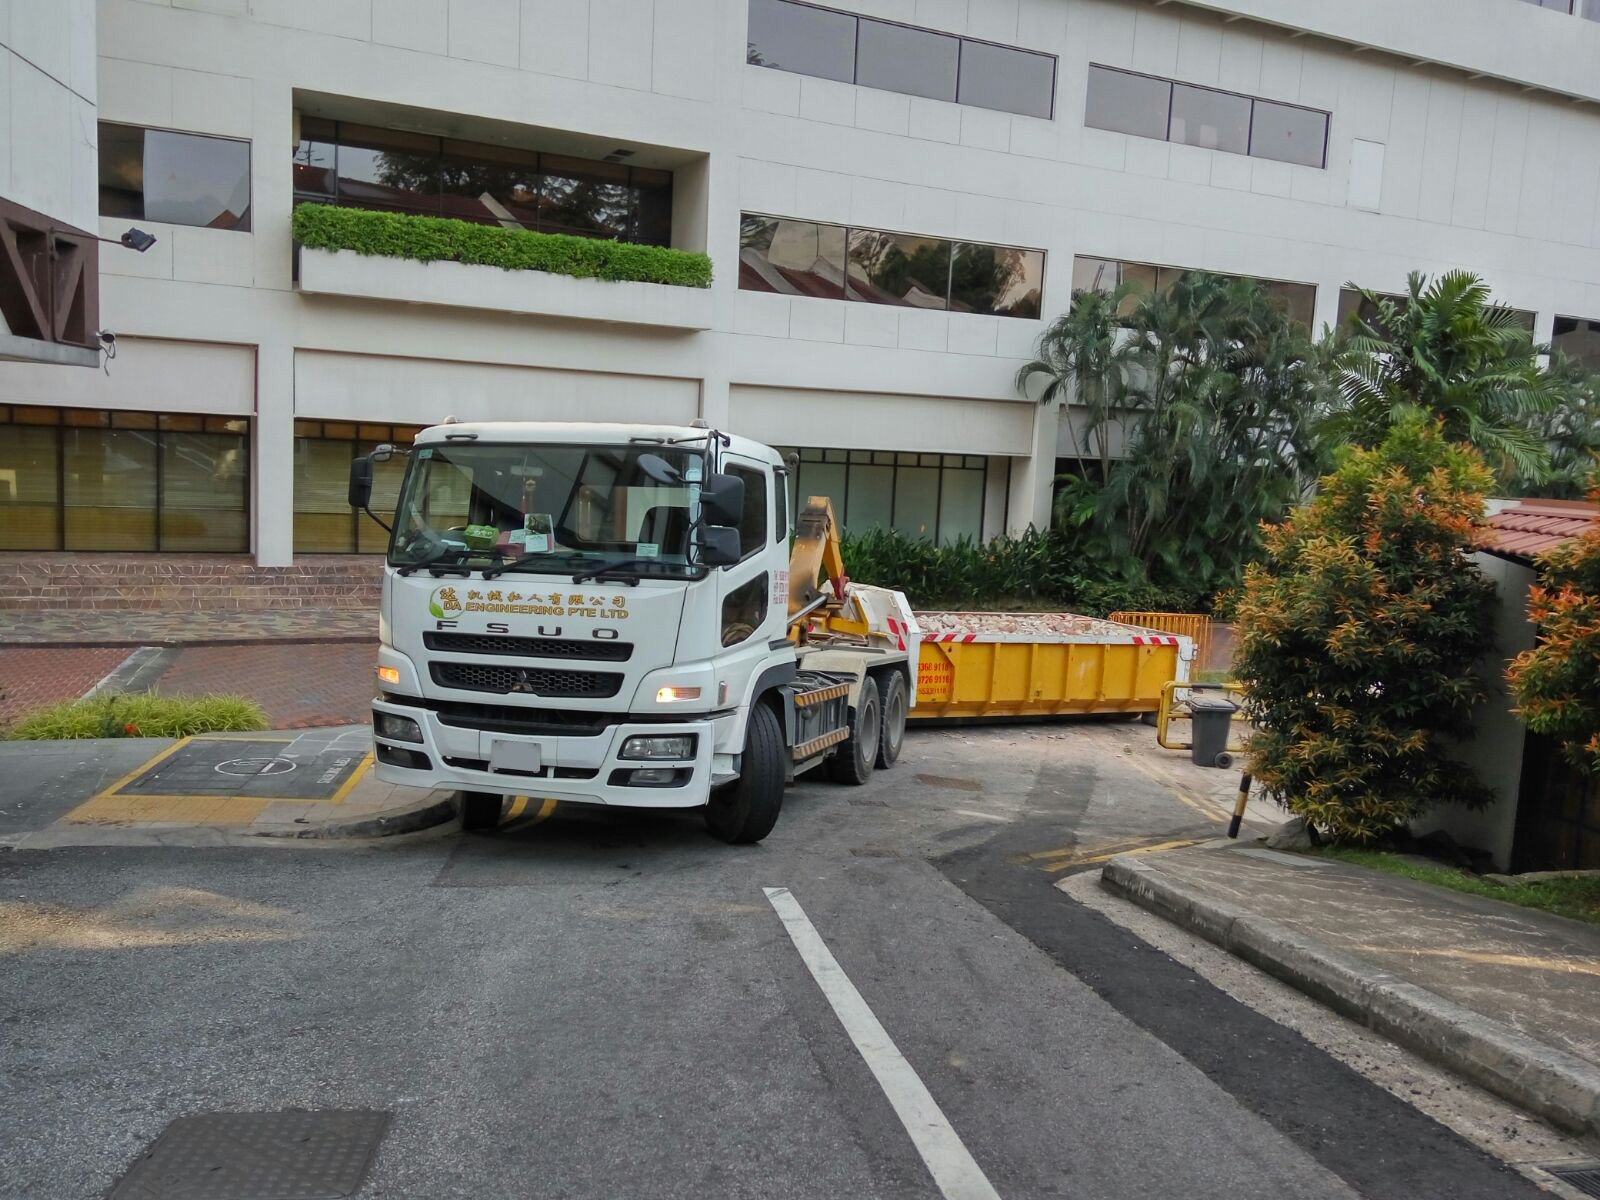 disposal company pick up truck dragging skip bin